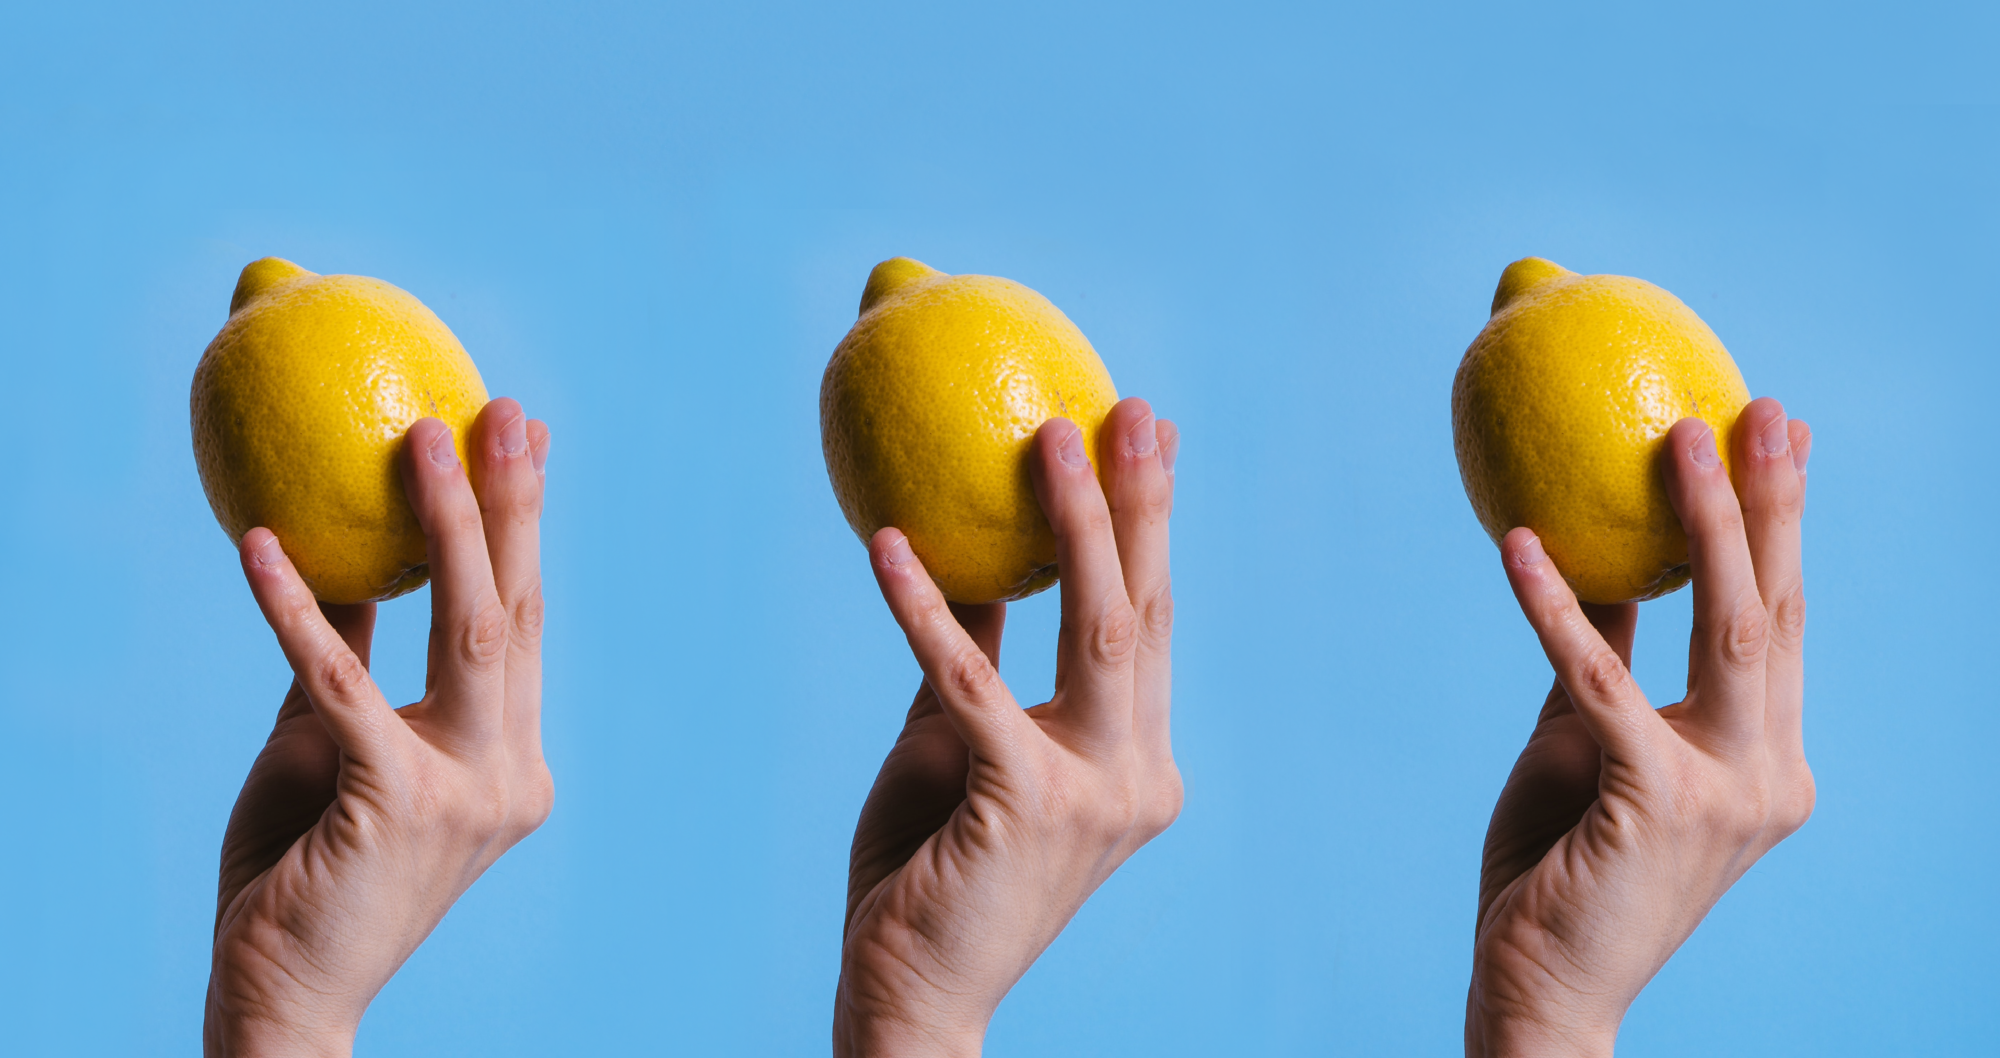 Three Hands Holding Three Lemons on a light blue background